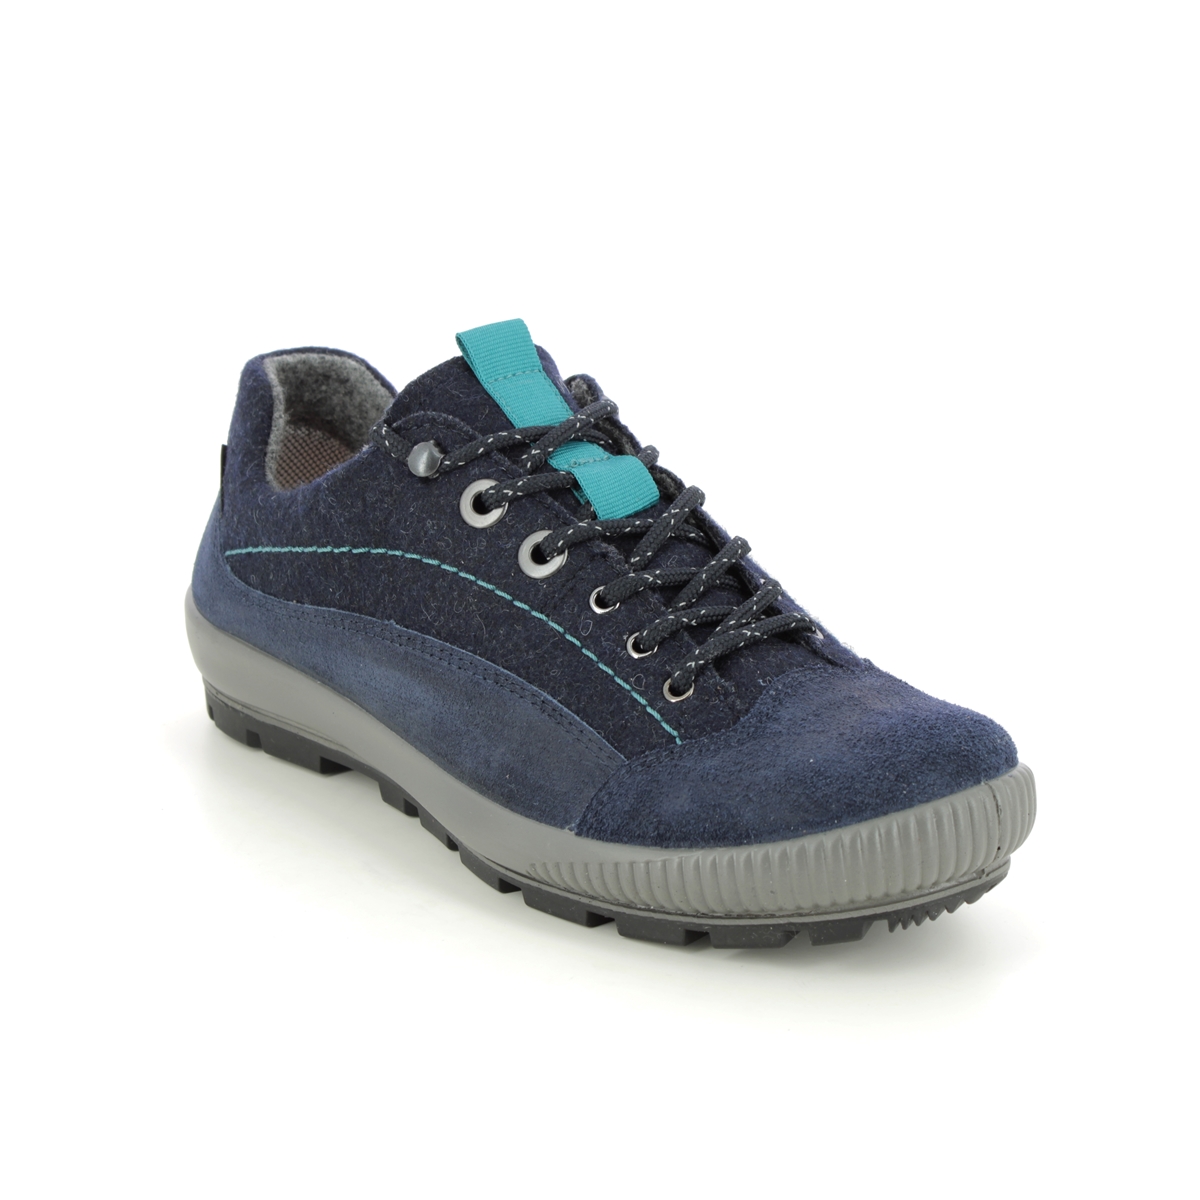 Legero Tanaro Trek Gtx Navy Suede Womens Walking Shoes 2000124-8010 In Size 8 In Plain Navy Suede